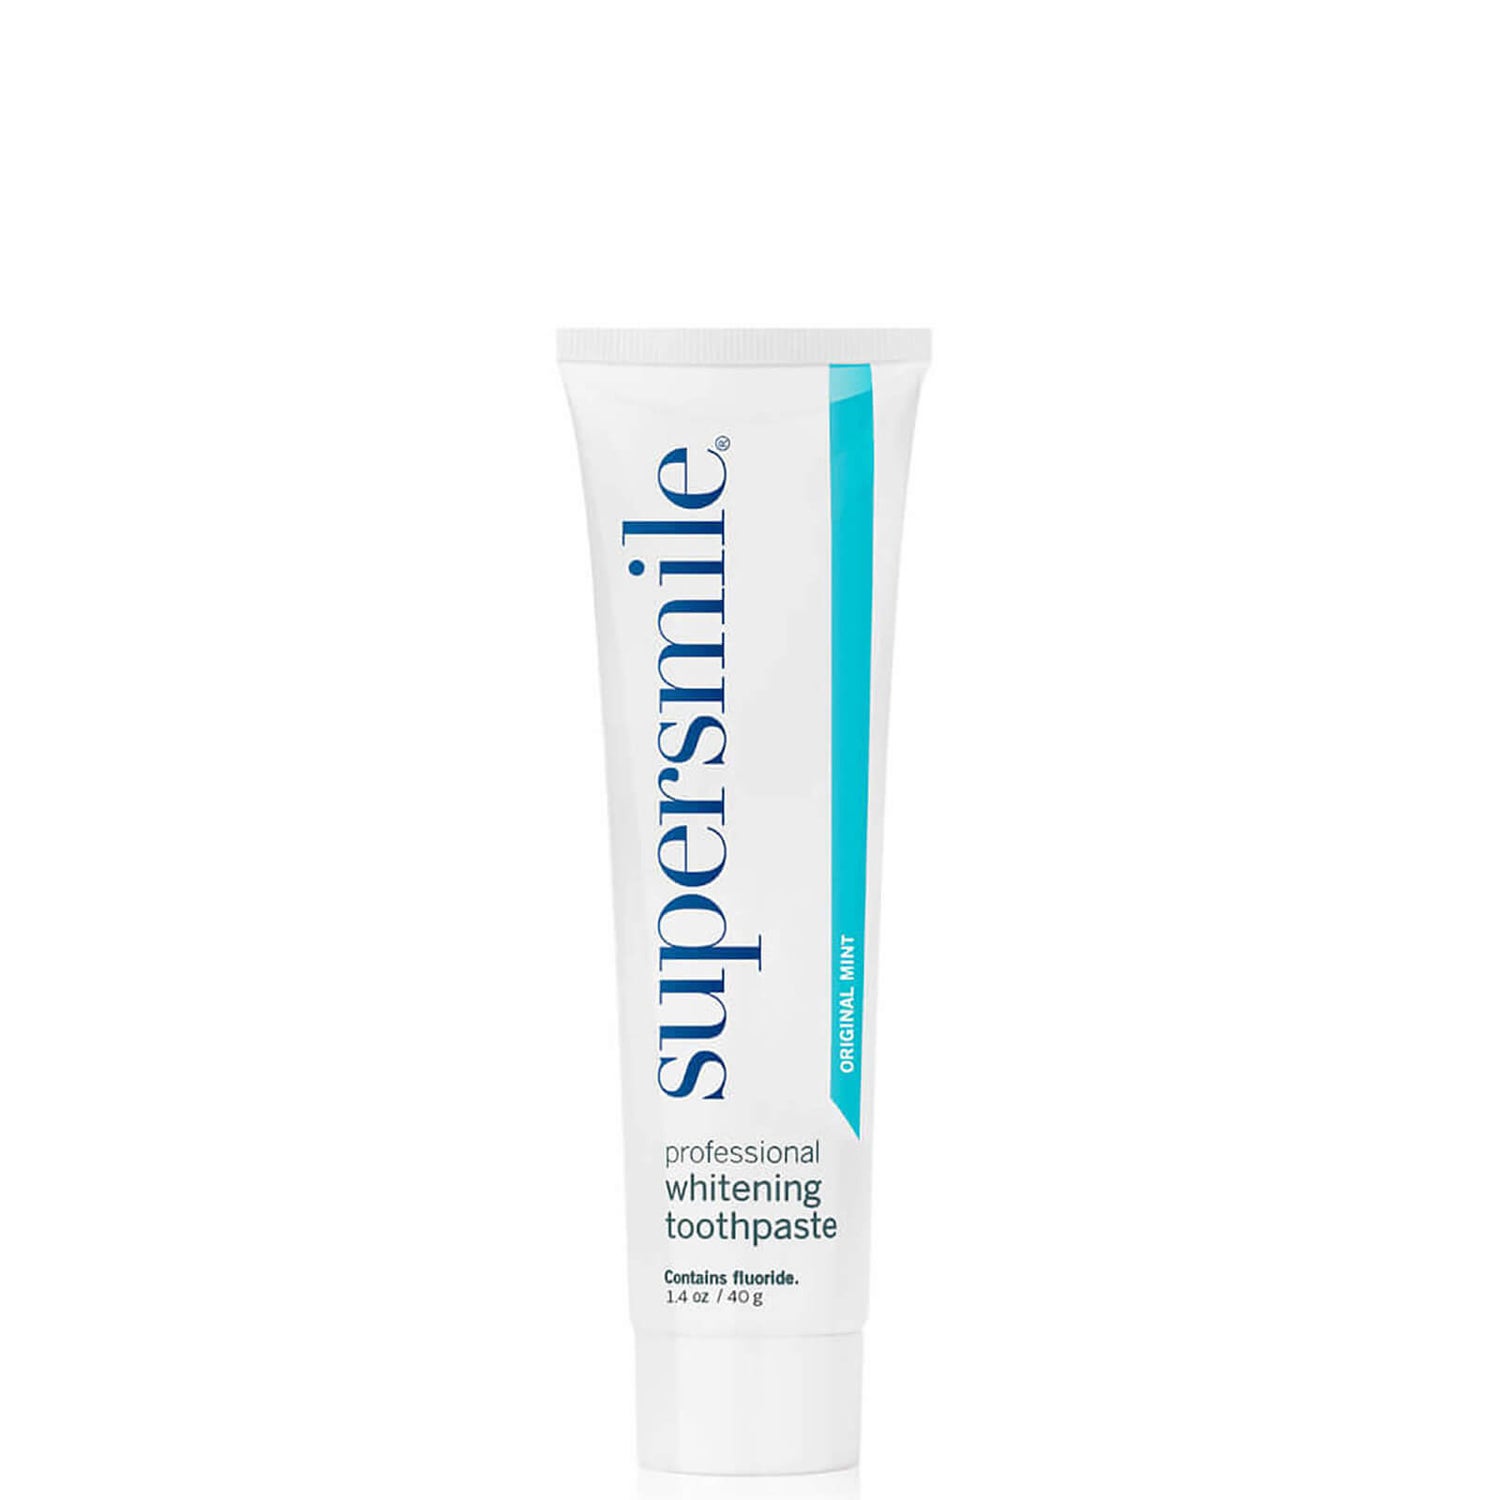 Supersmile Professional Whitening Toothpaste - Original Mint (1.4 oz.)